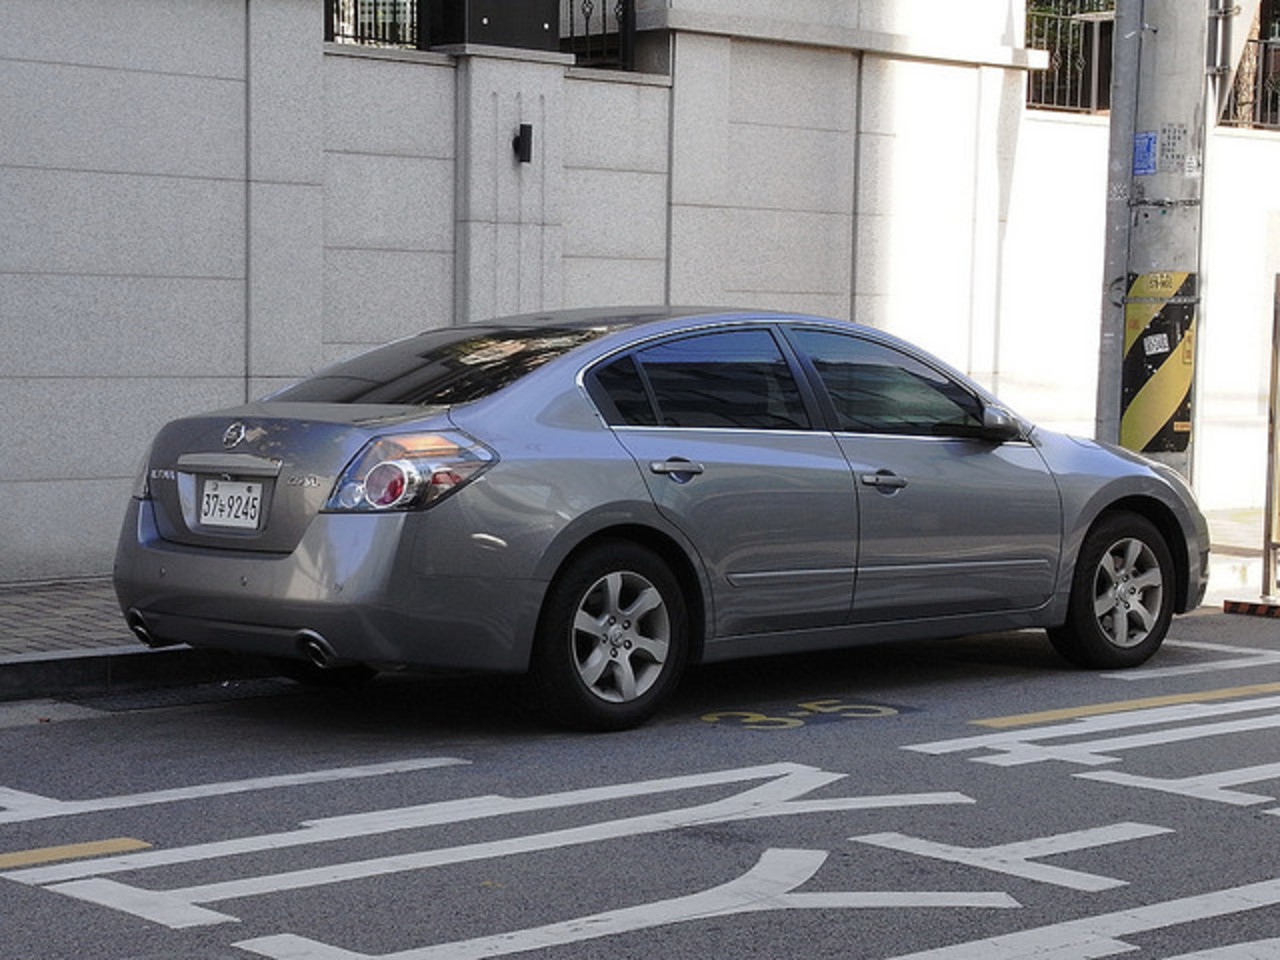 Nissan Altima | Flickr - Photo Sharing!